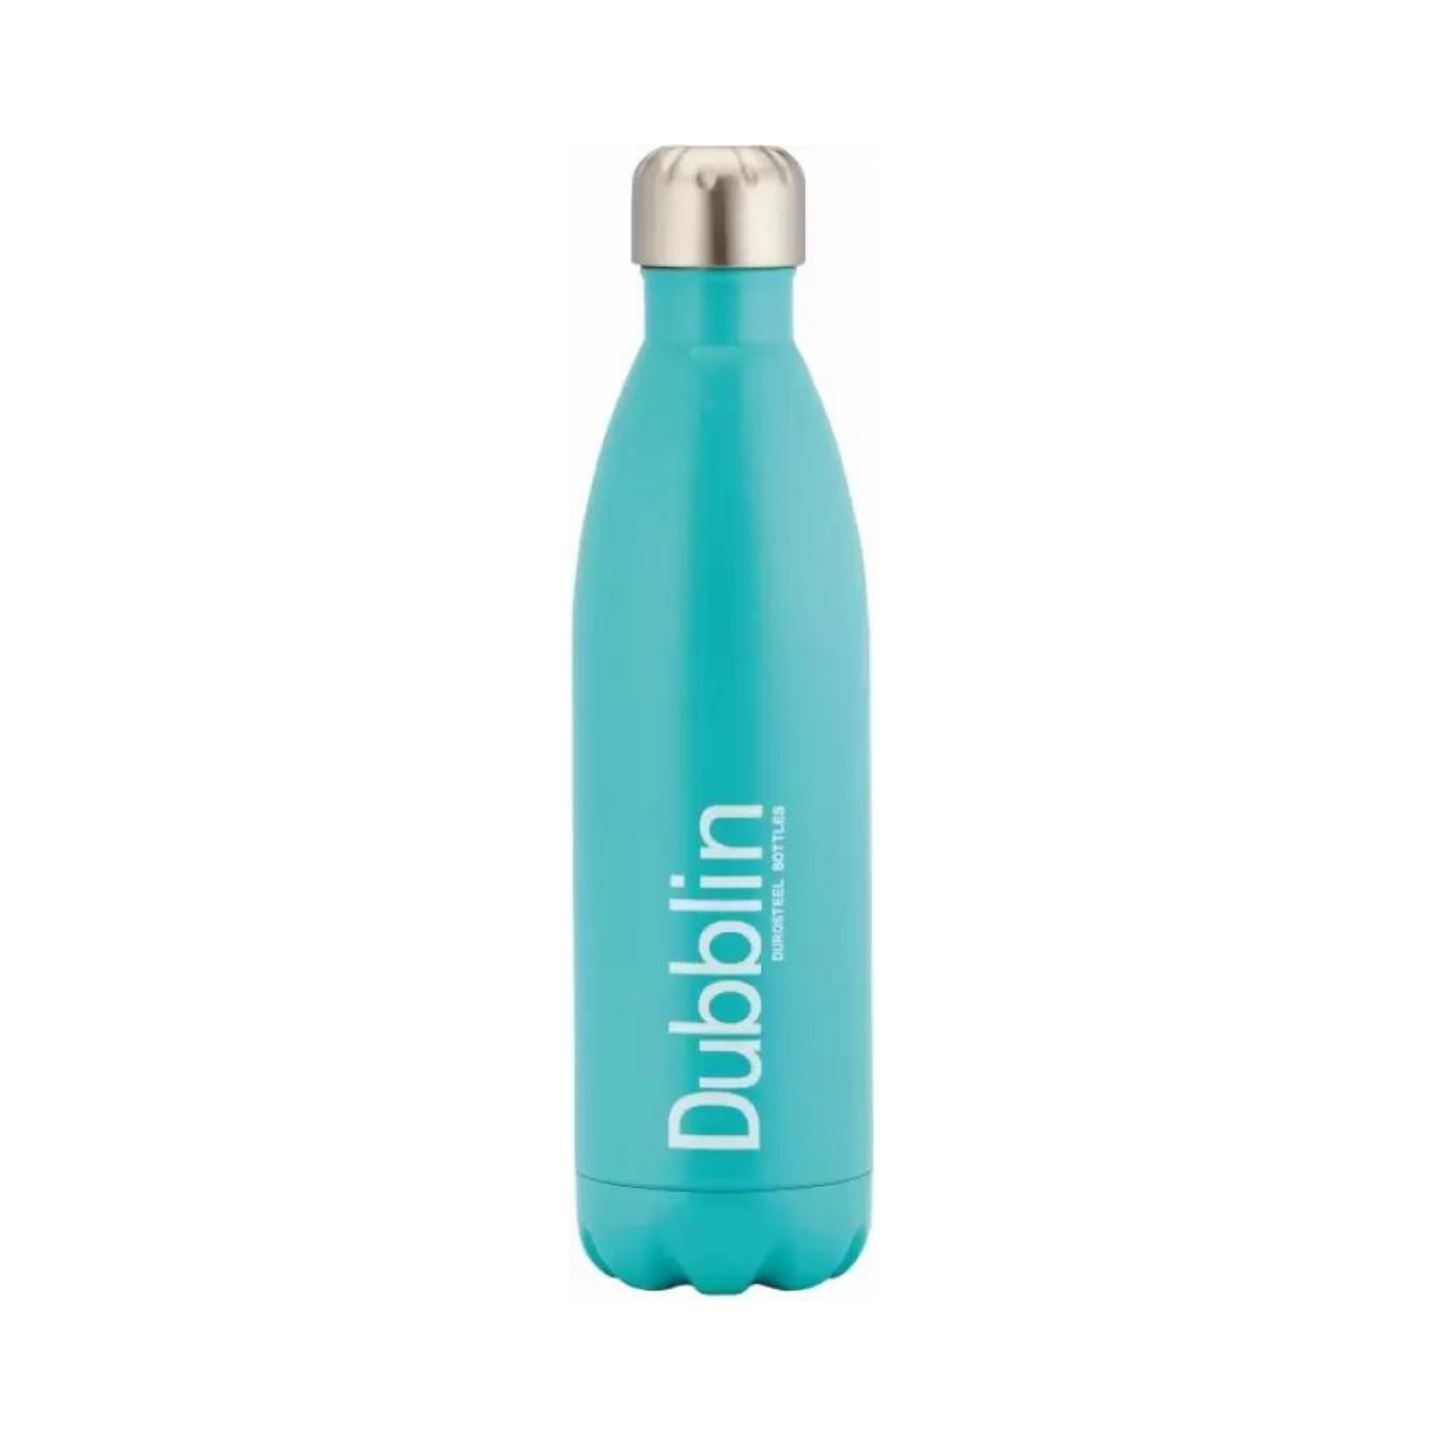 Dubblin Kango Water Bottle